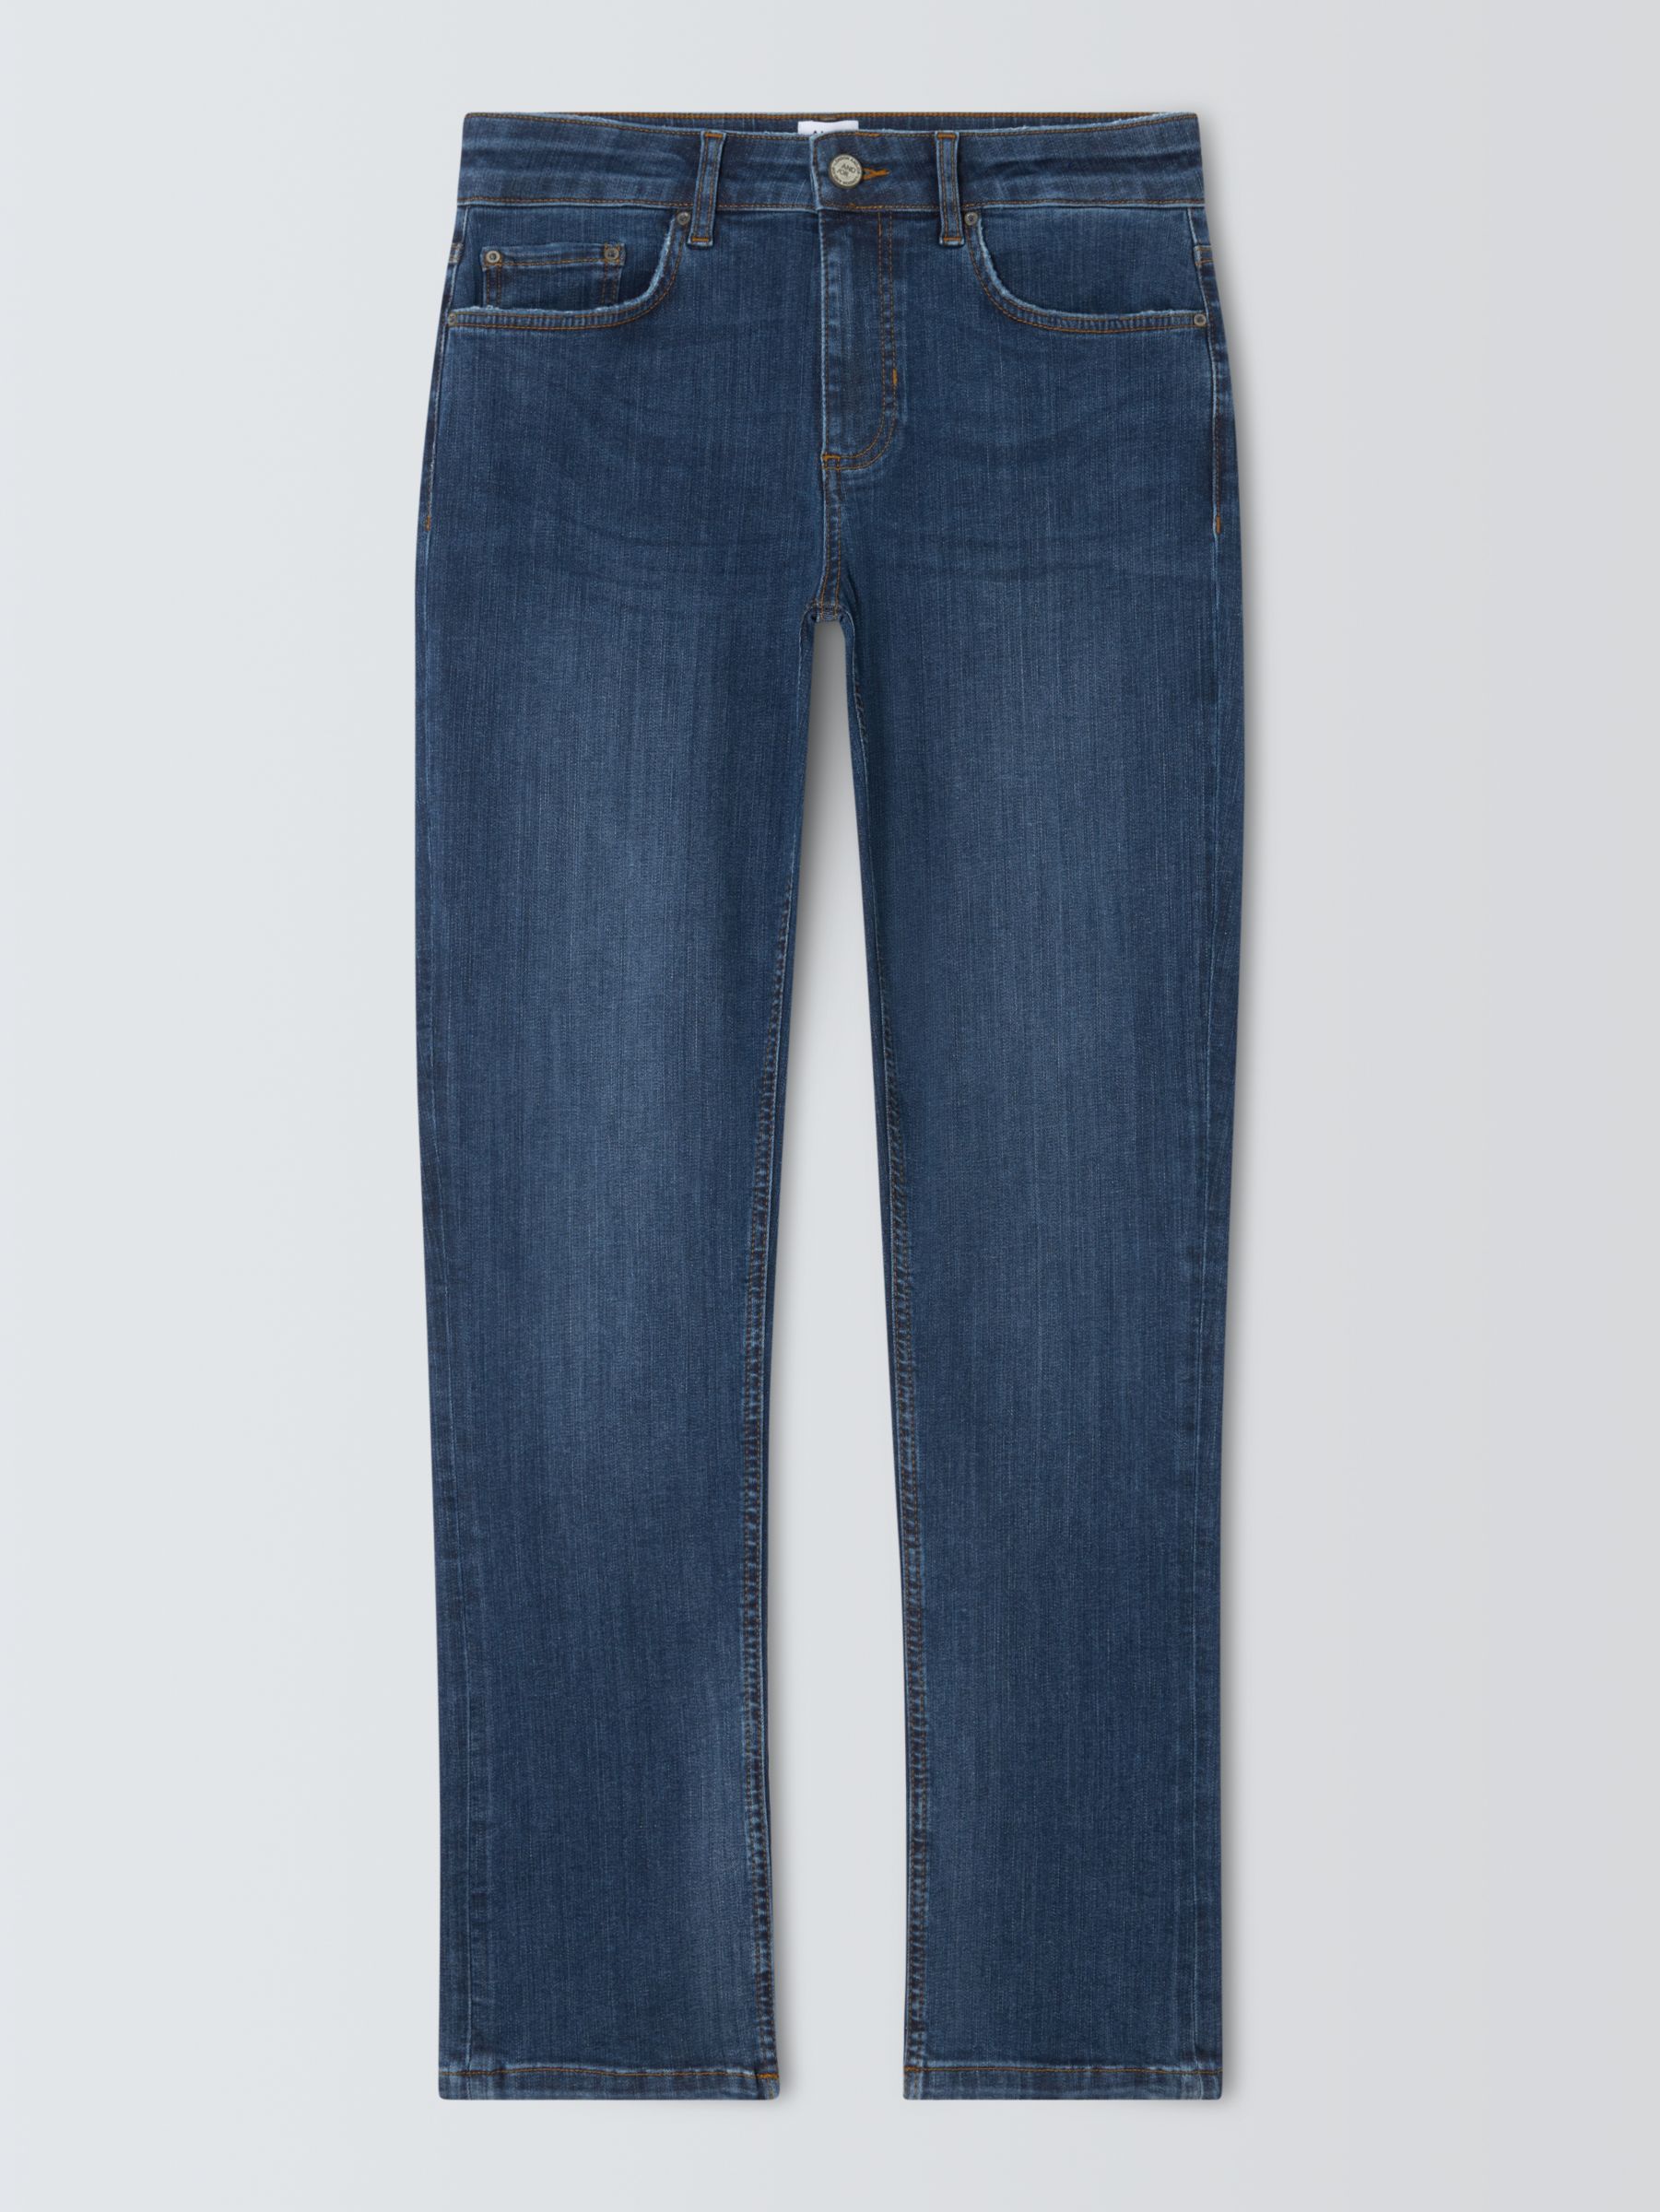 AND/OR Silverlake Straight Leg Jeans, Blue Horizon, 26R